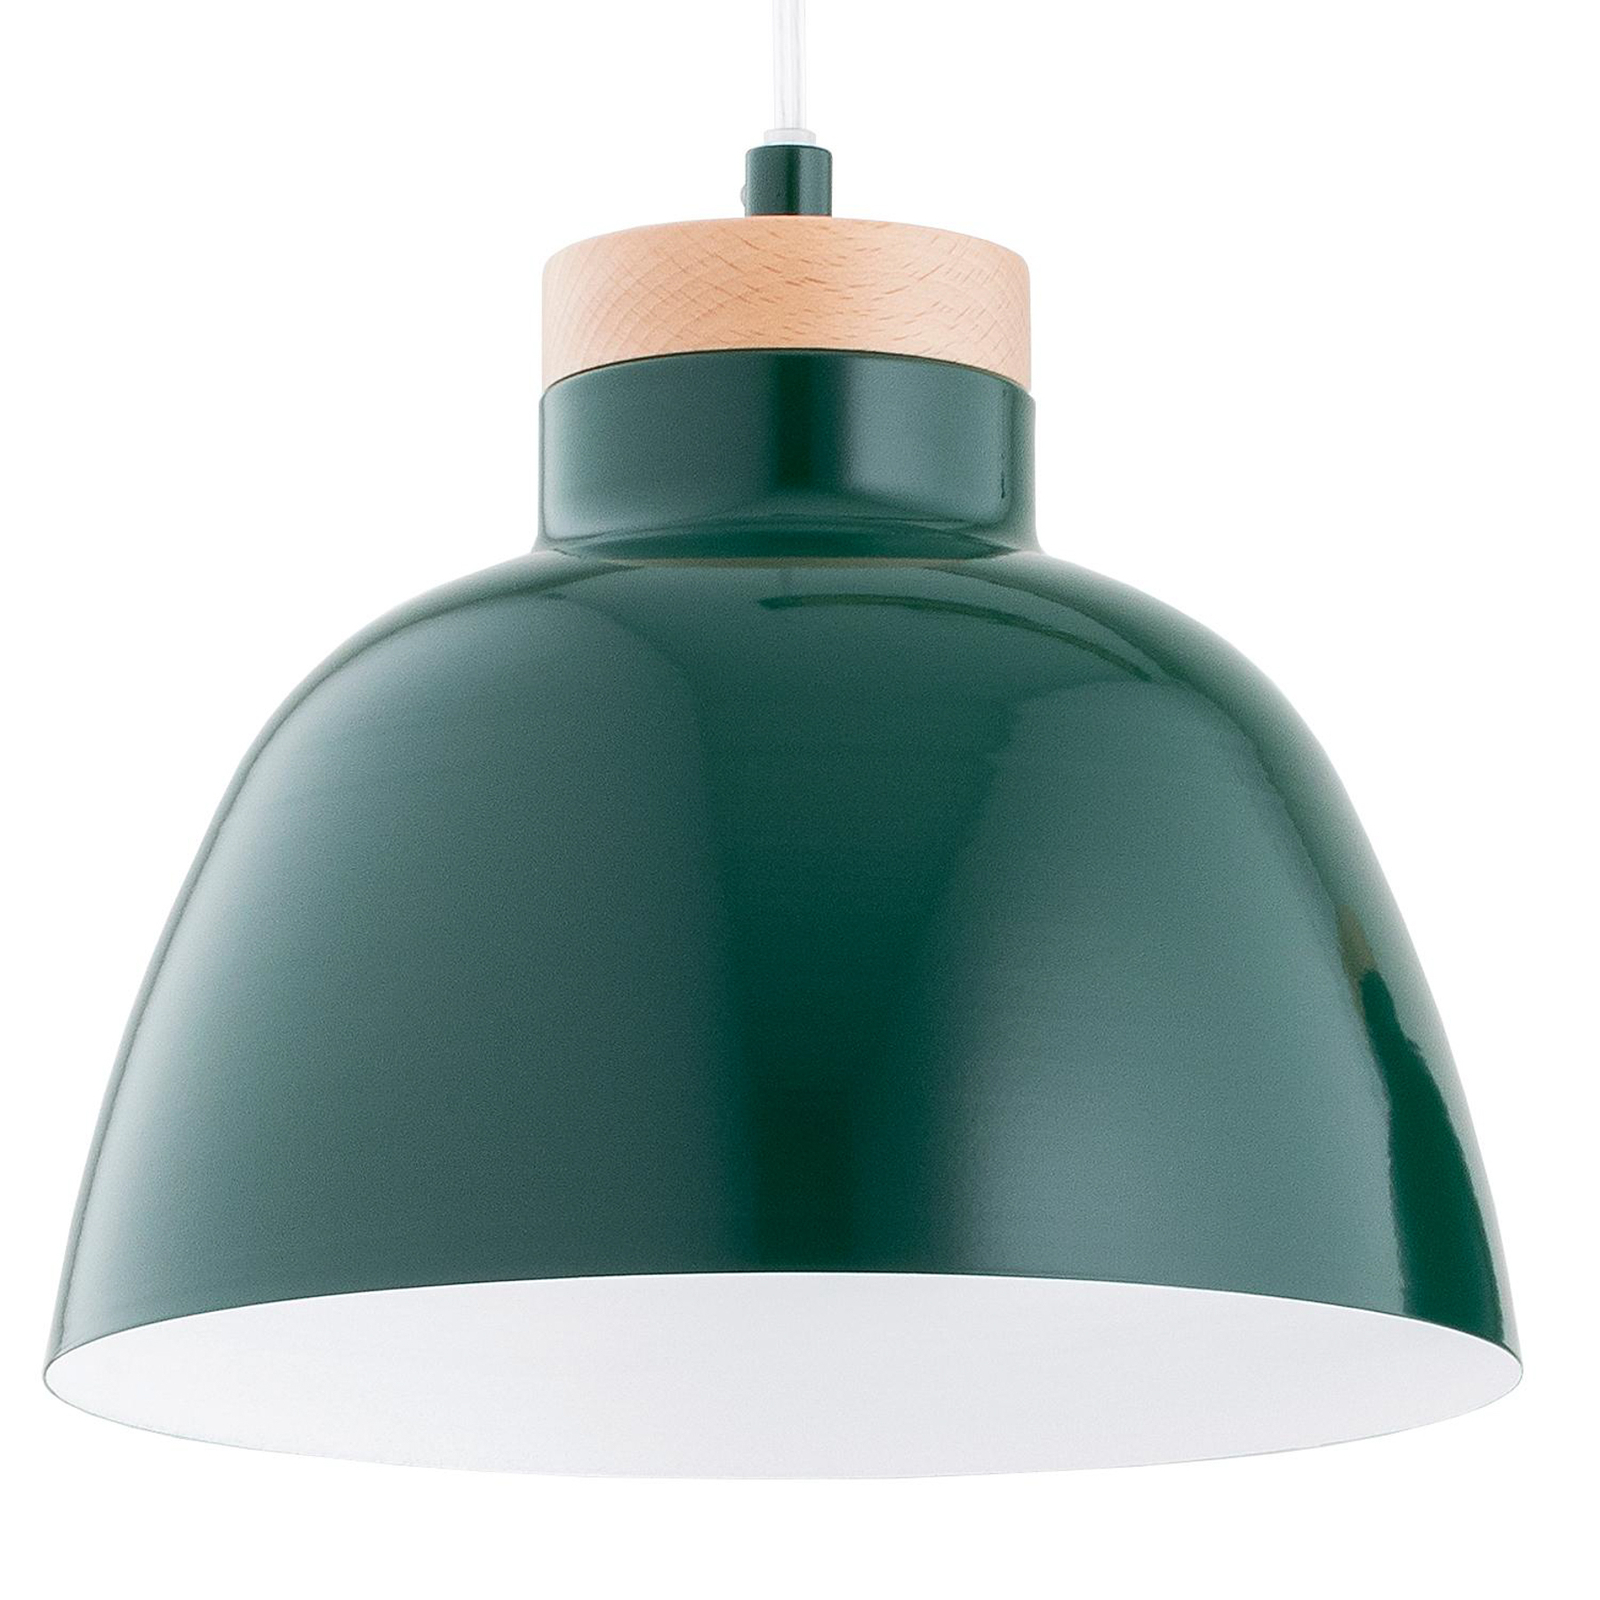 Lorien pendant light, dark green, 3-bulb, metal, wood